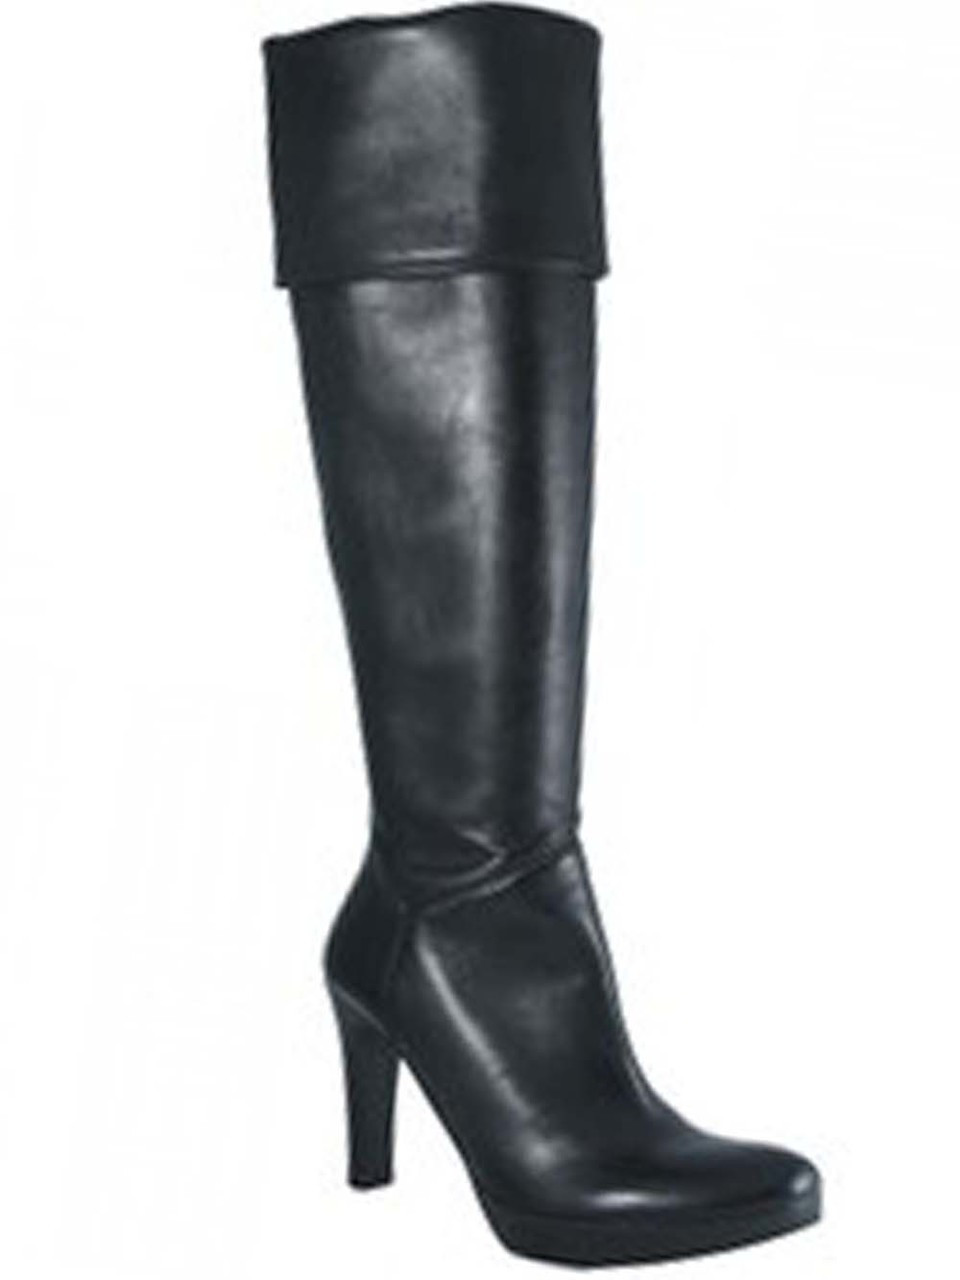 black knee high heeled women's boots